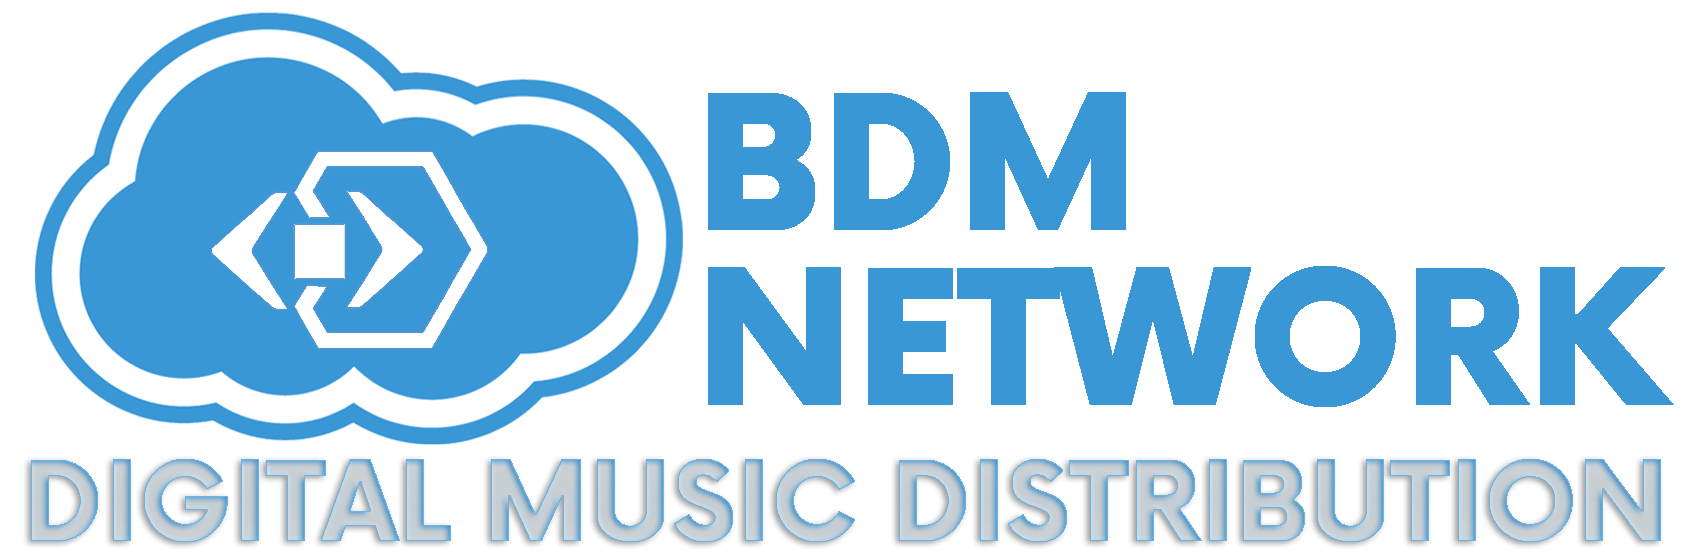 BDM Logo with blue subheading